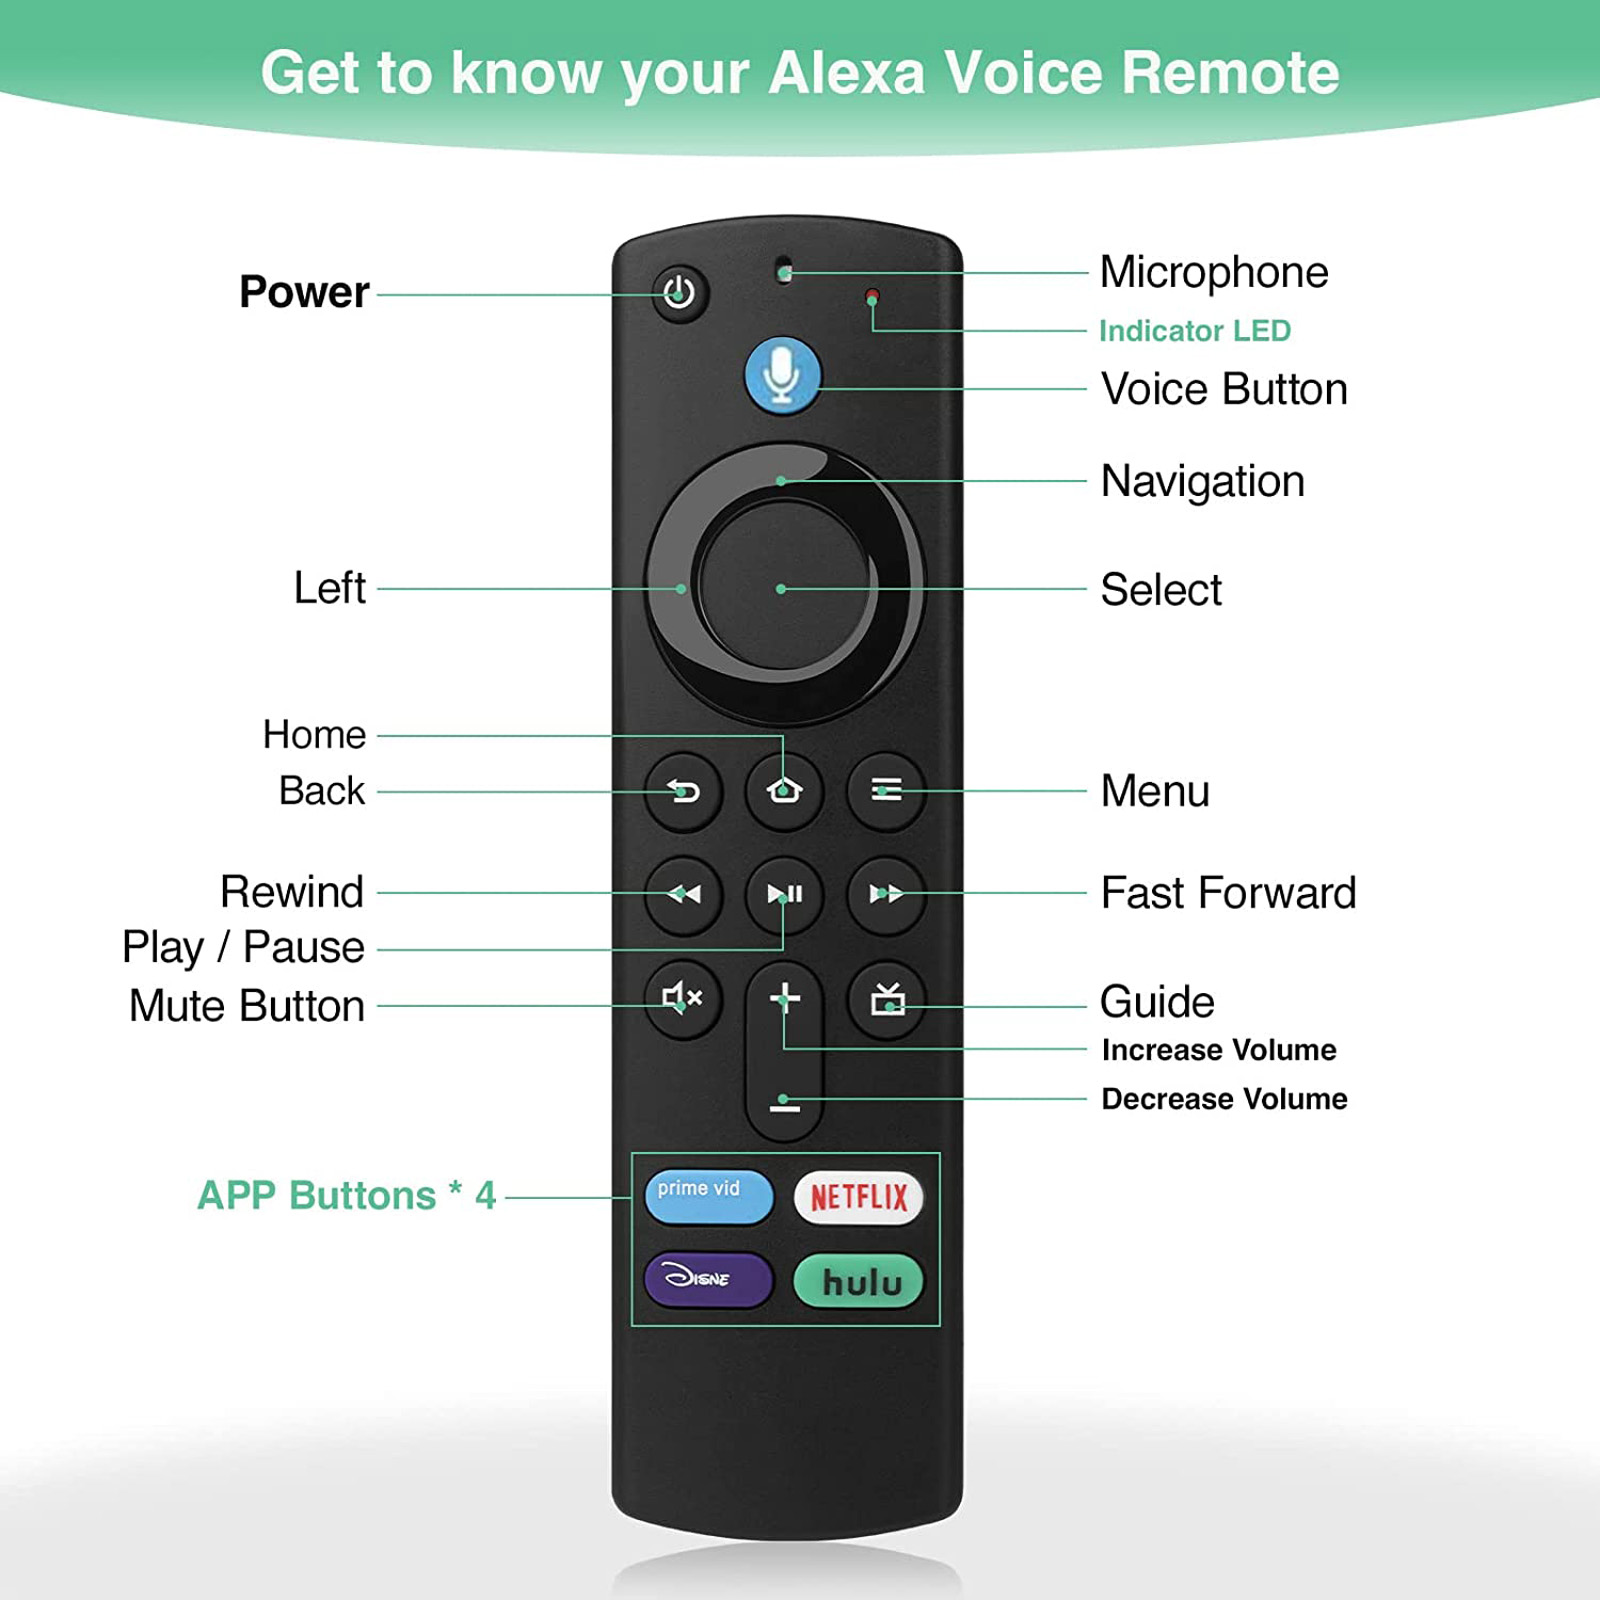 Fire TV Stick with Alexa Voice Remote (3rd Gen)